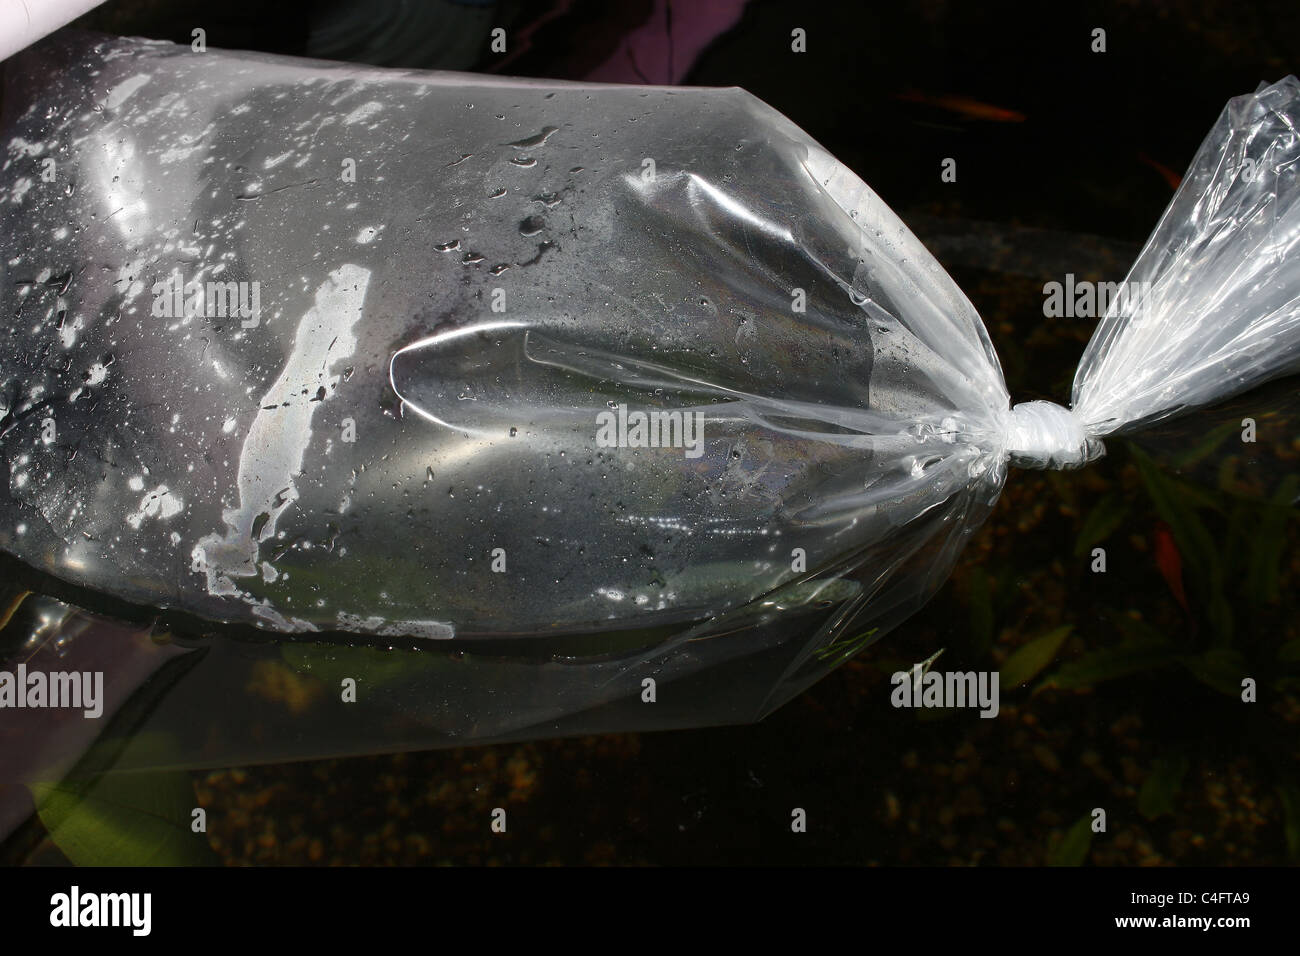 bag containing fish floating in aquarium to equalize water temperature Stock Photo